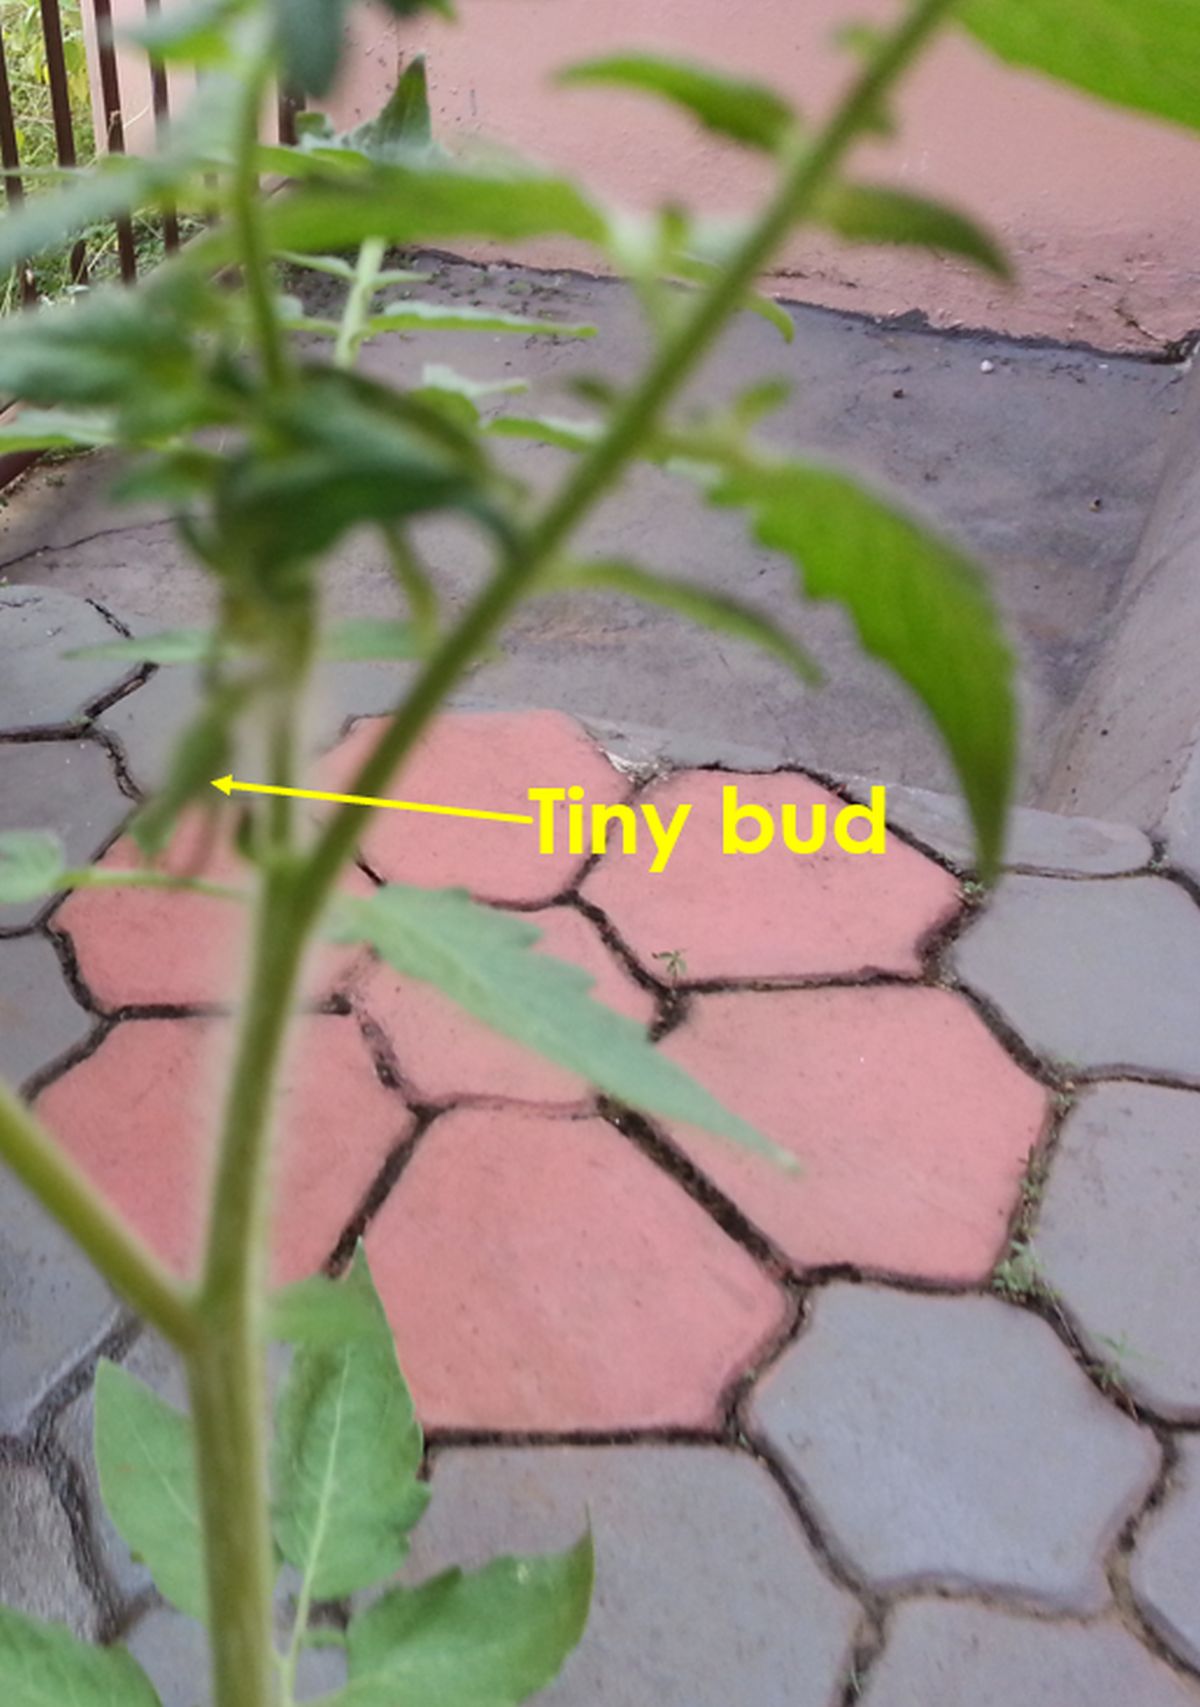 Tomato flower bud (Solanum lycopersicum)